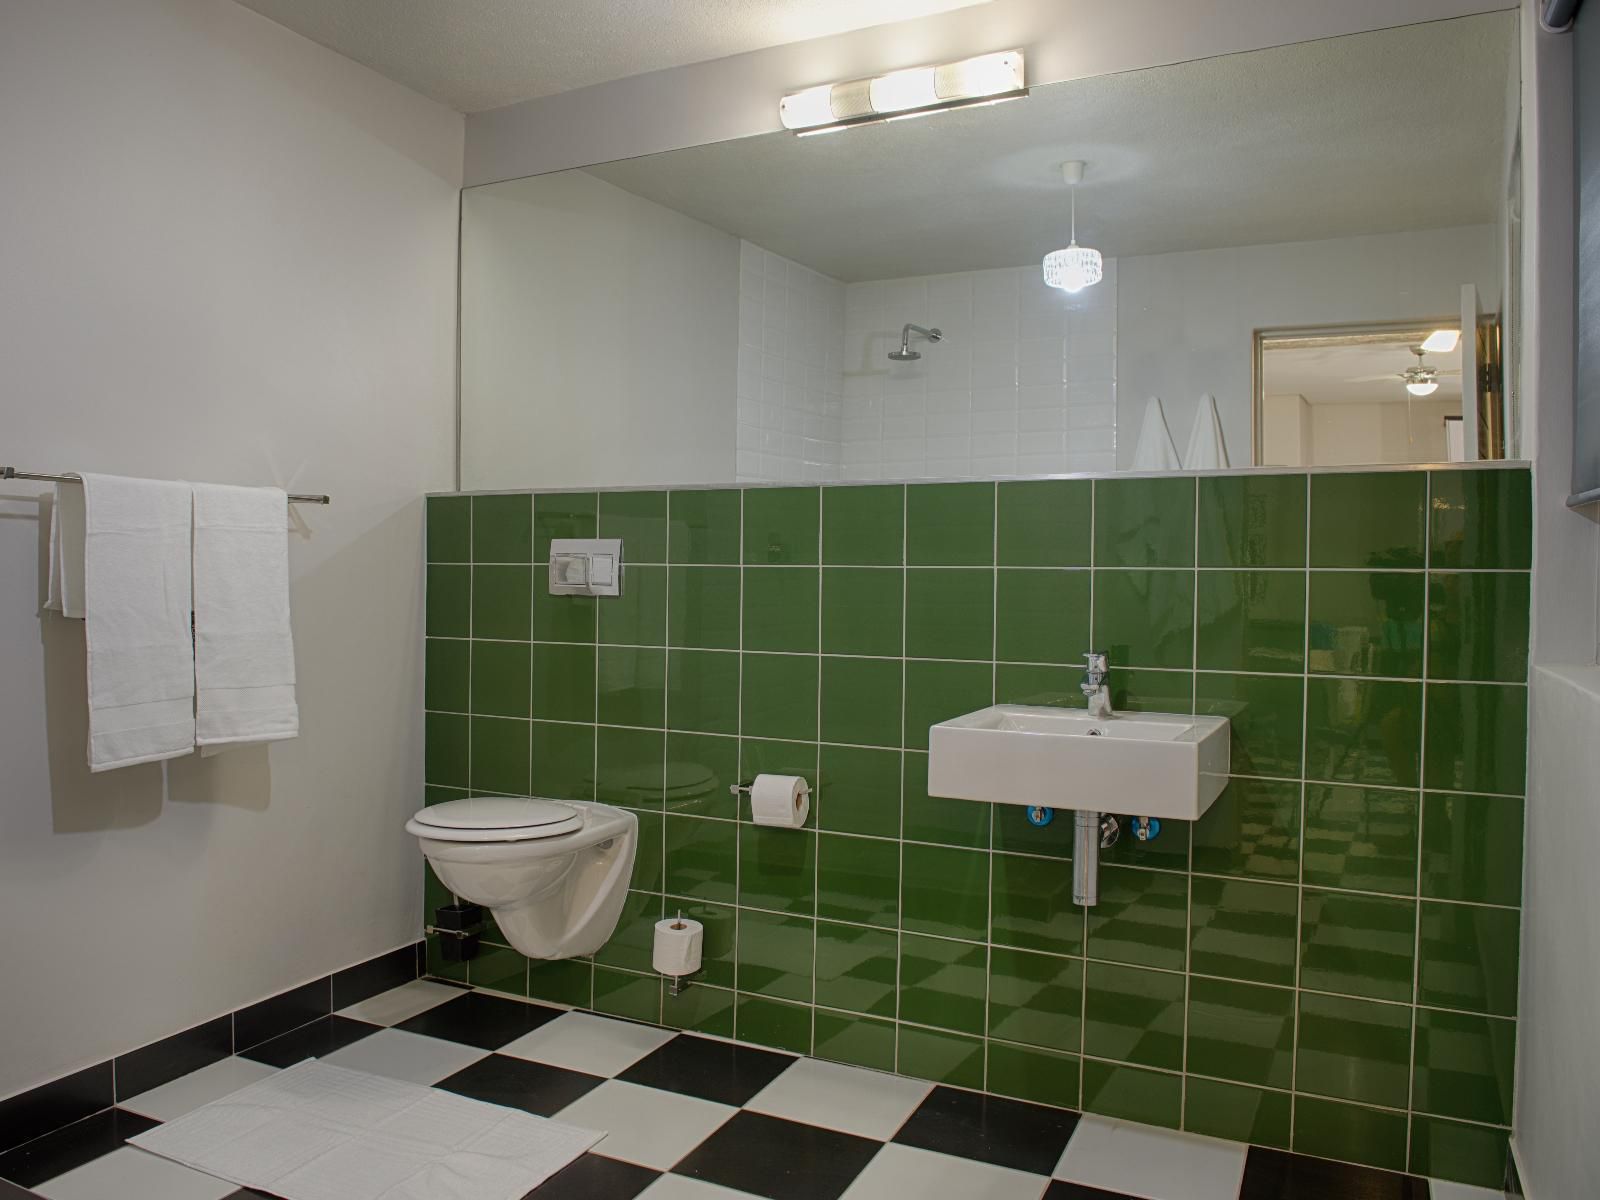 Hptwelve Accommodation Sonheuwel Central Nelspruit Mpumalanga South Africa Bathroom